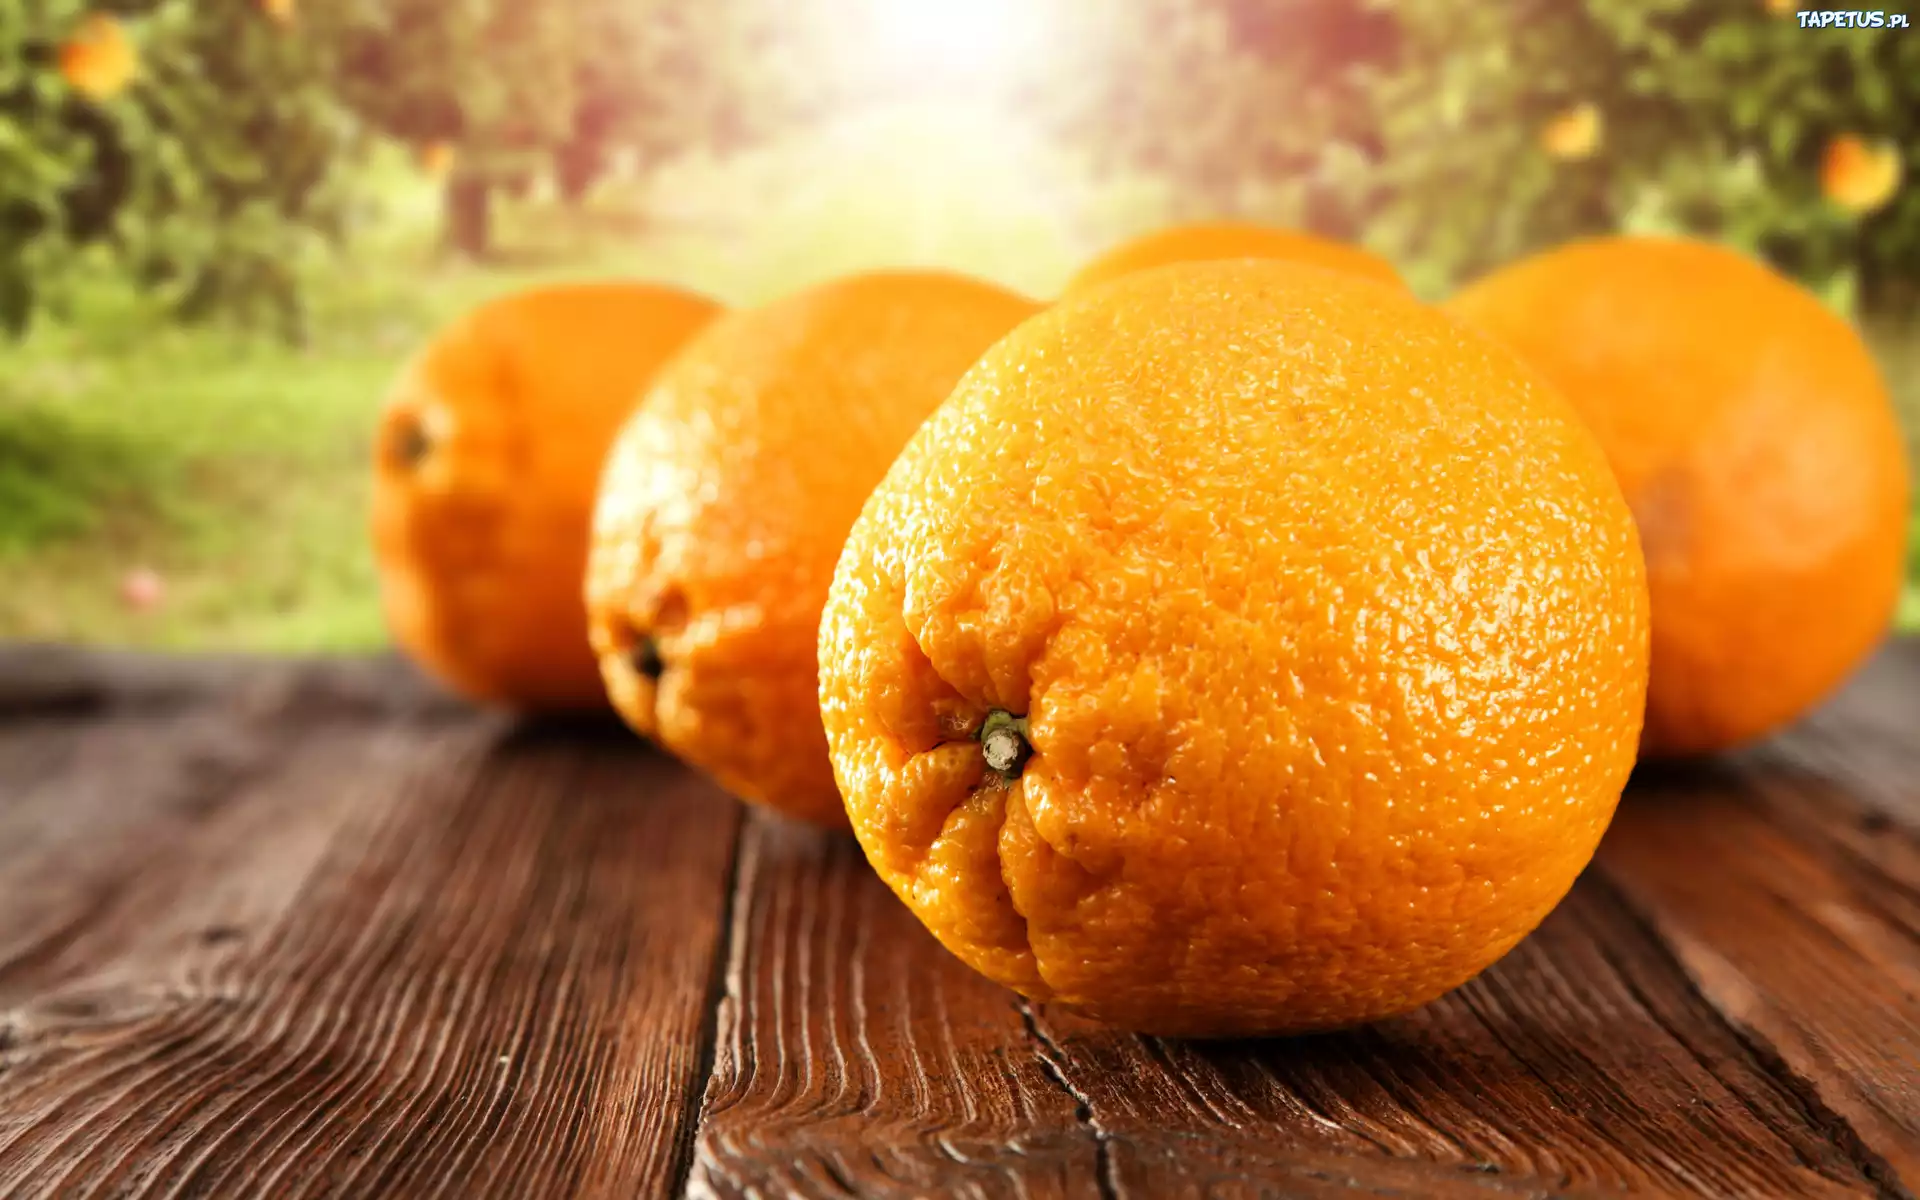 Pomarańcze, Deski